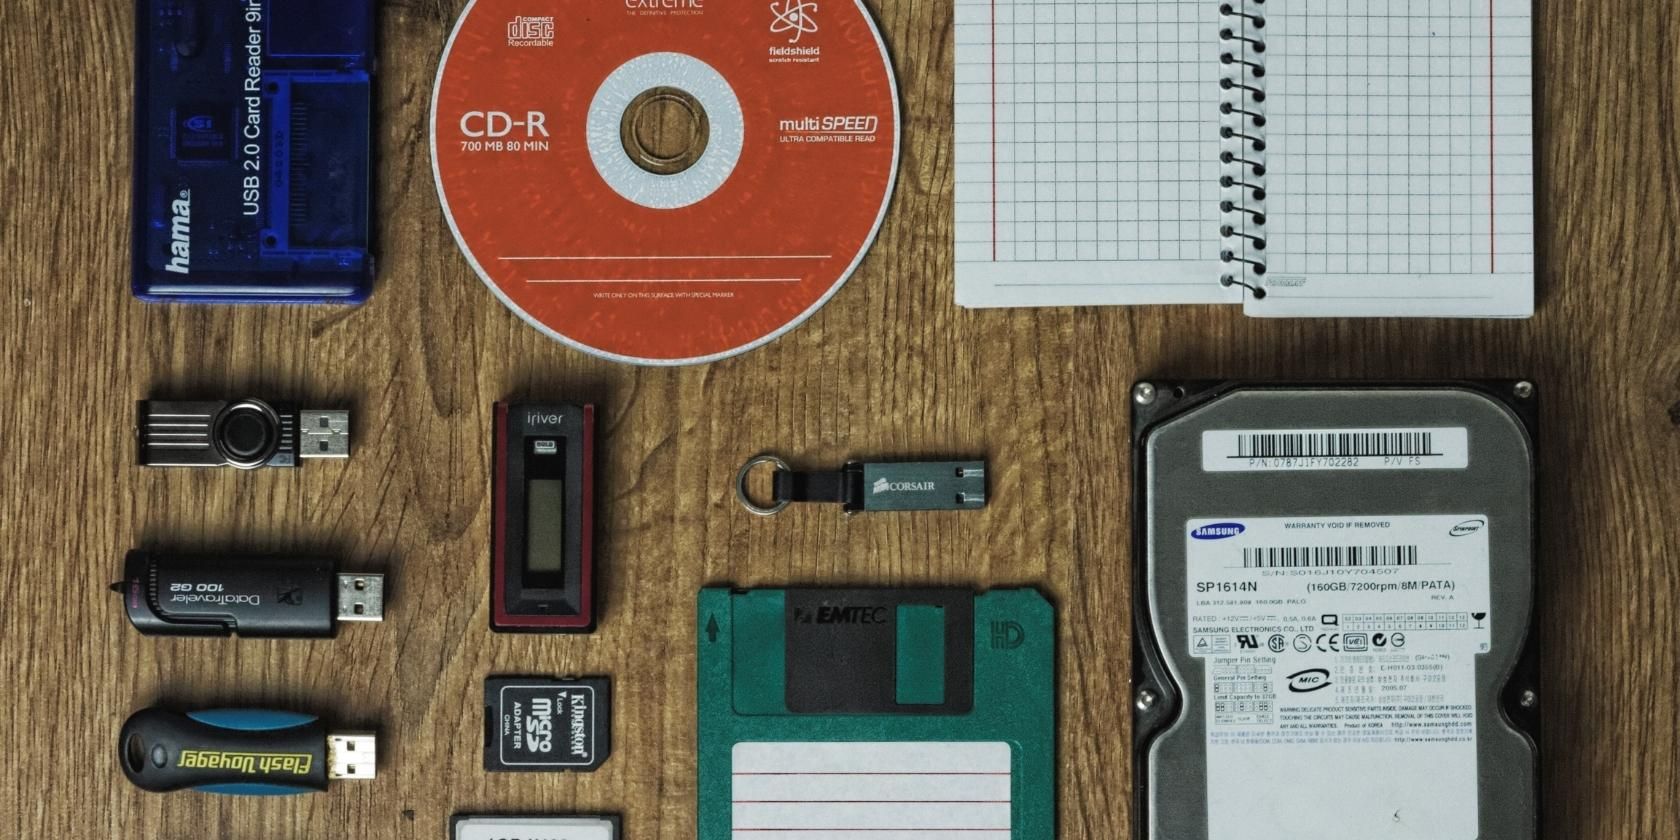 USB flash drive, memory card, CD, and hard drive